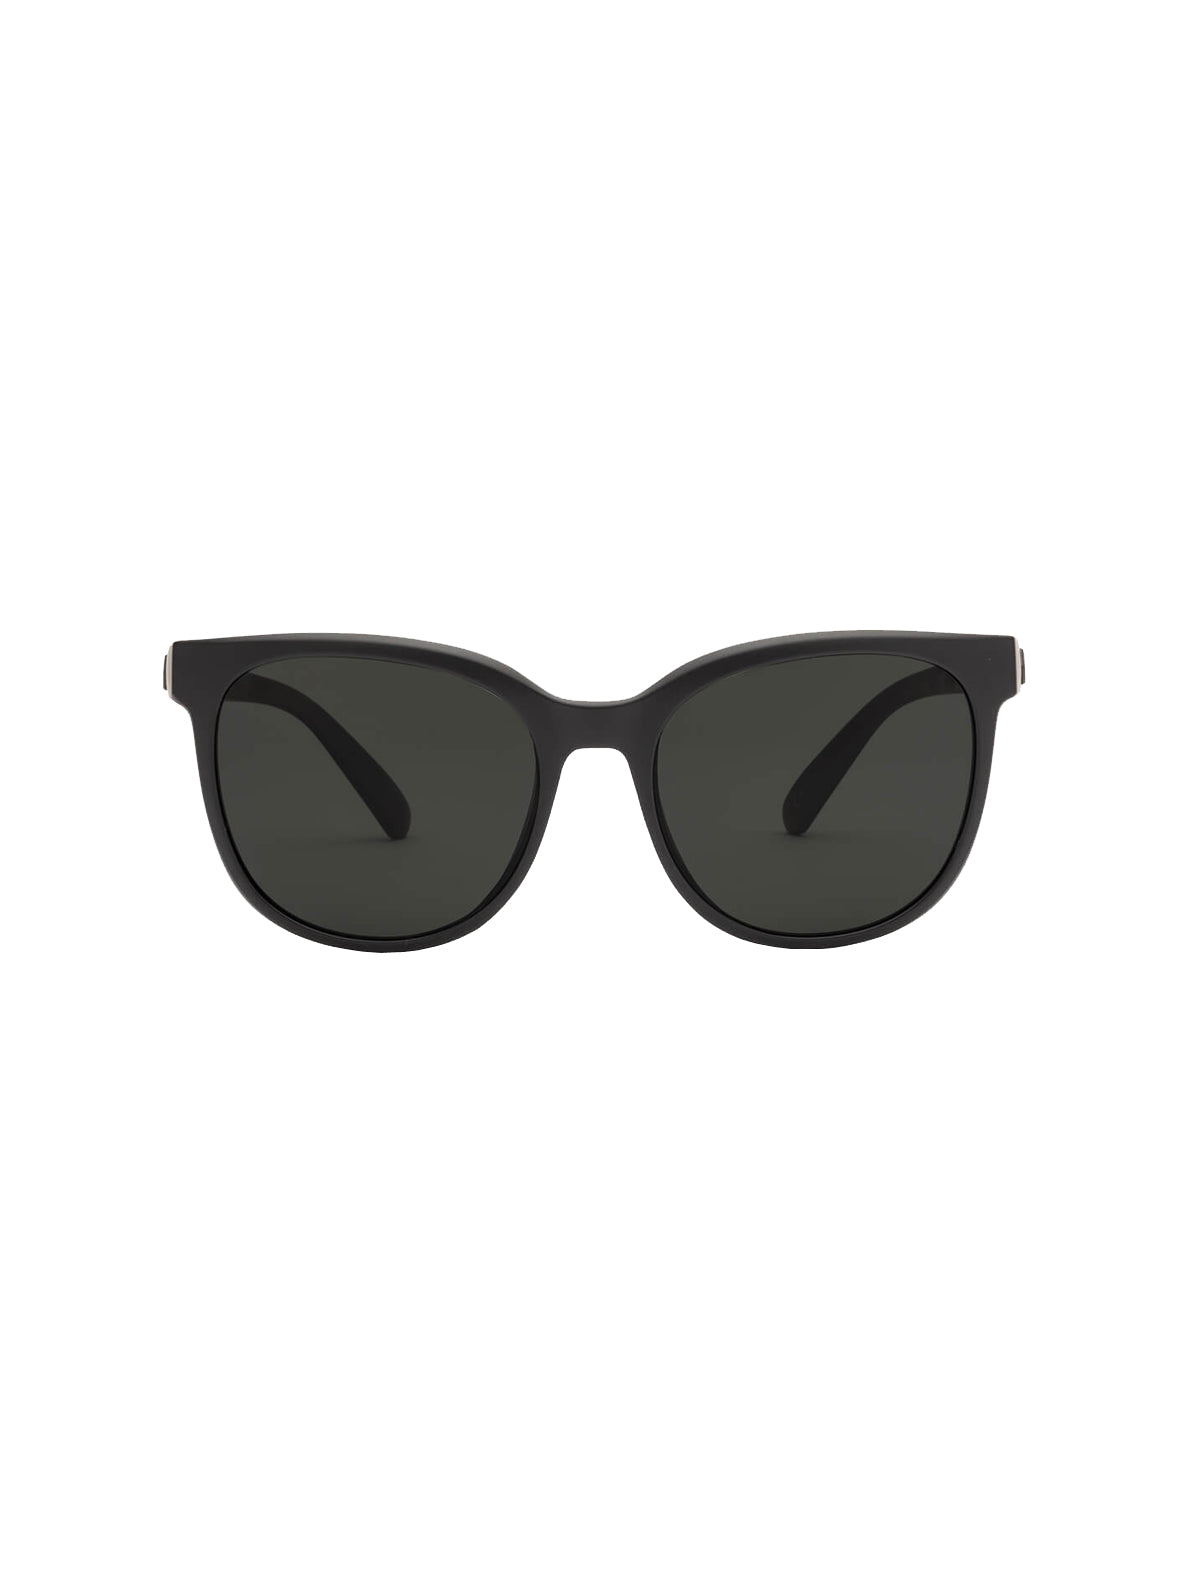 Volcom Garden Polarized Sunglasses MatteBlack GreyPolar